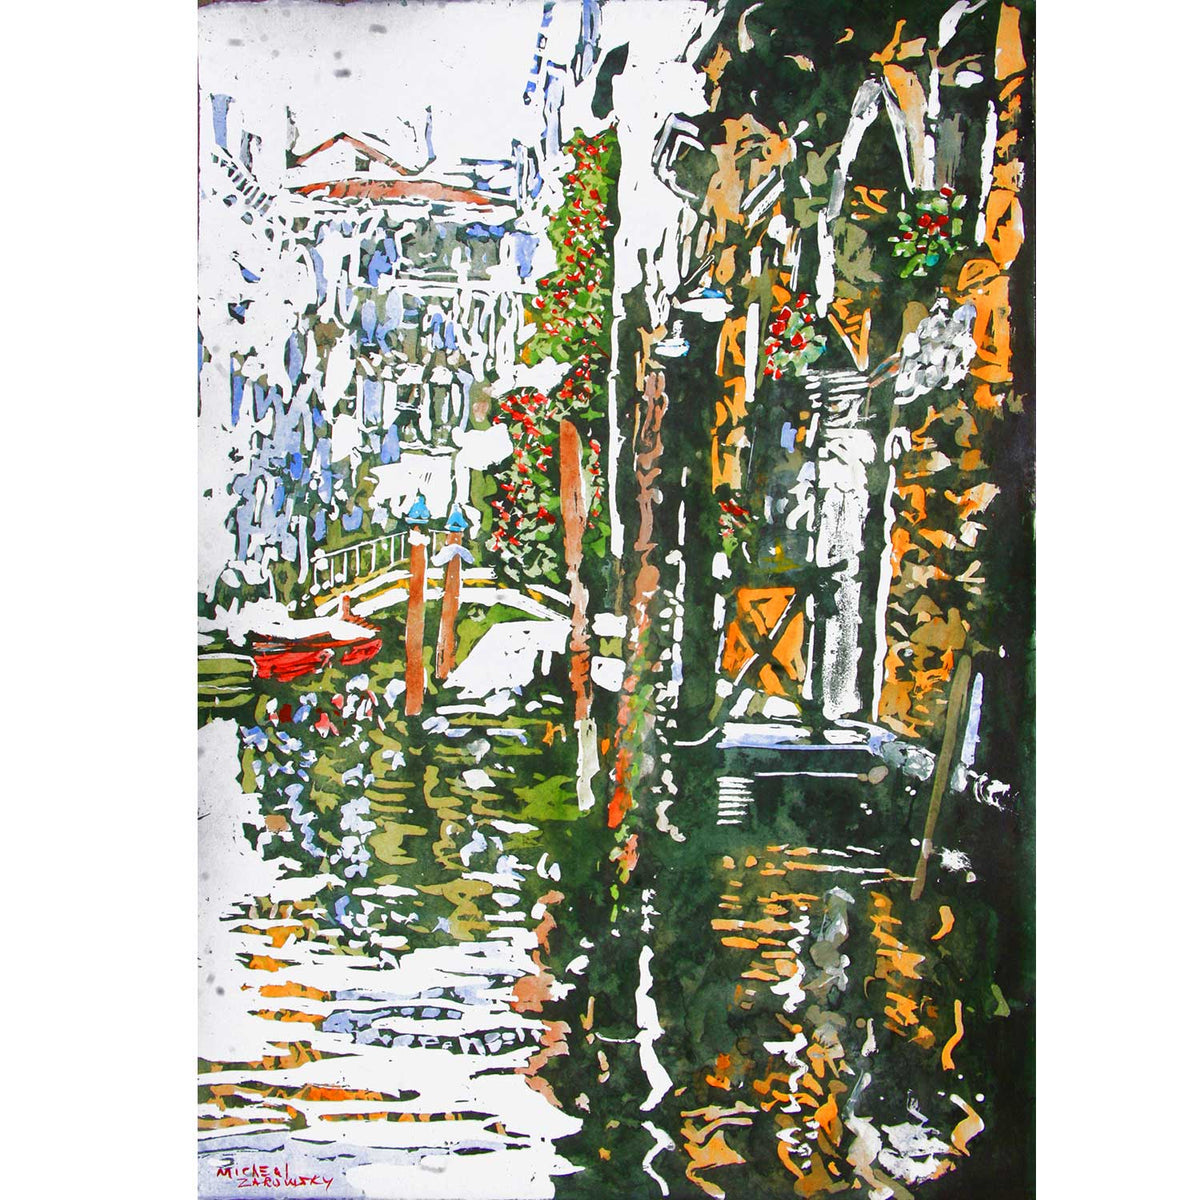 Micheal Zarowsky - Canal Landing Venice 22" x 15.5"